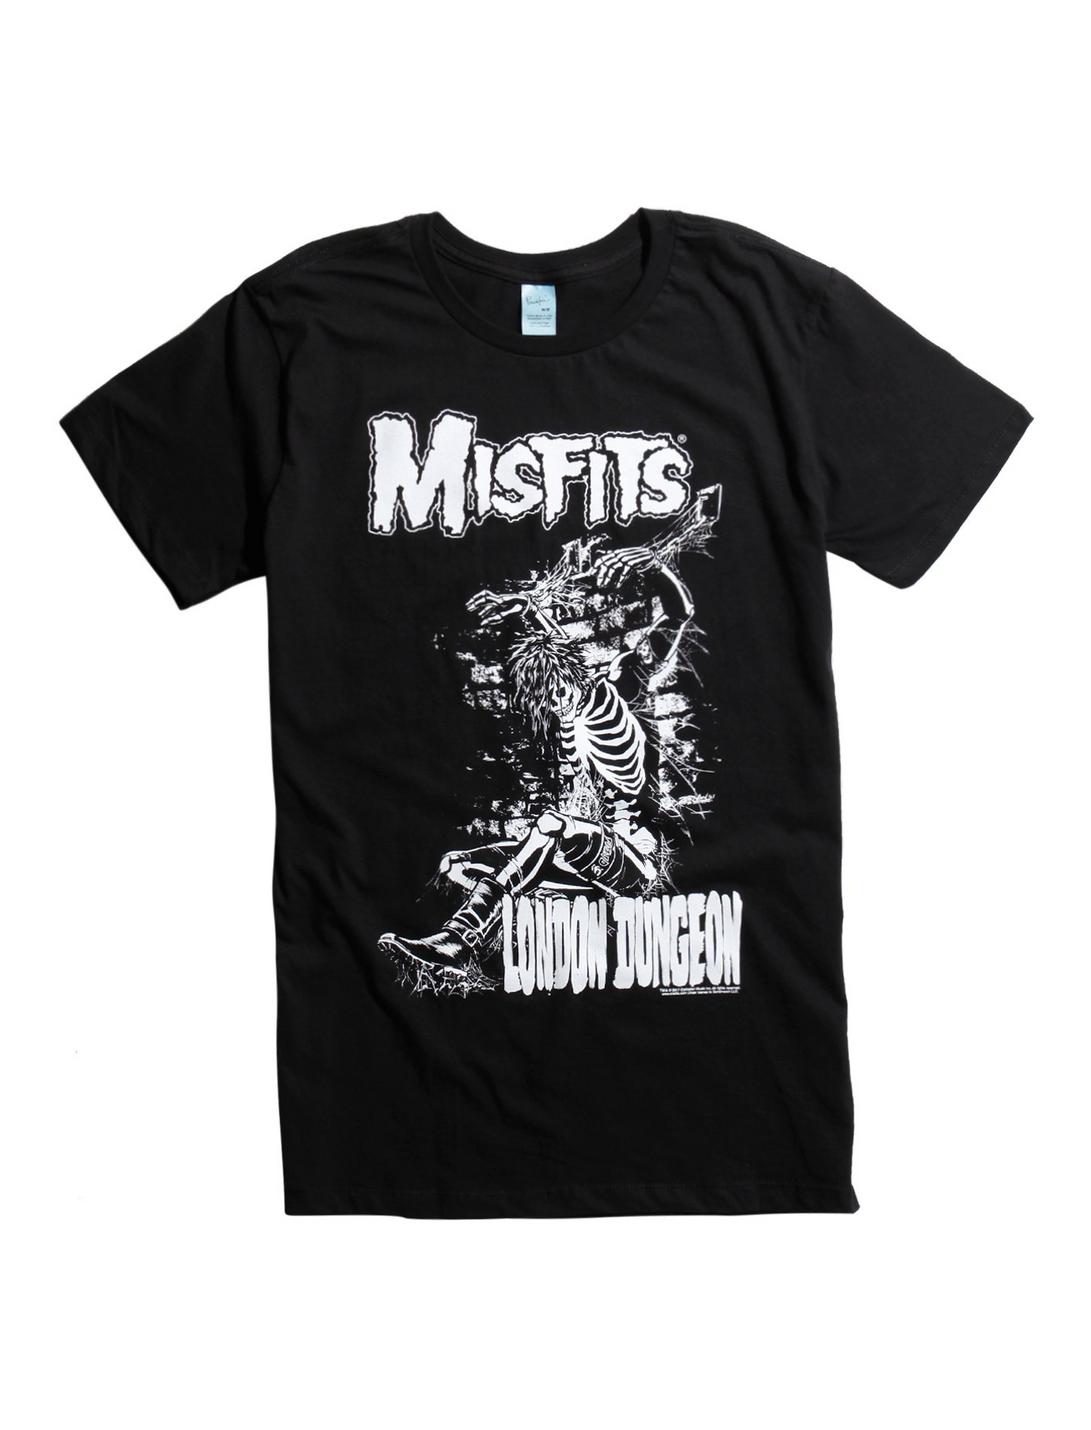 Misfits London Dungeon T-Shirt, BLACK, hi-res